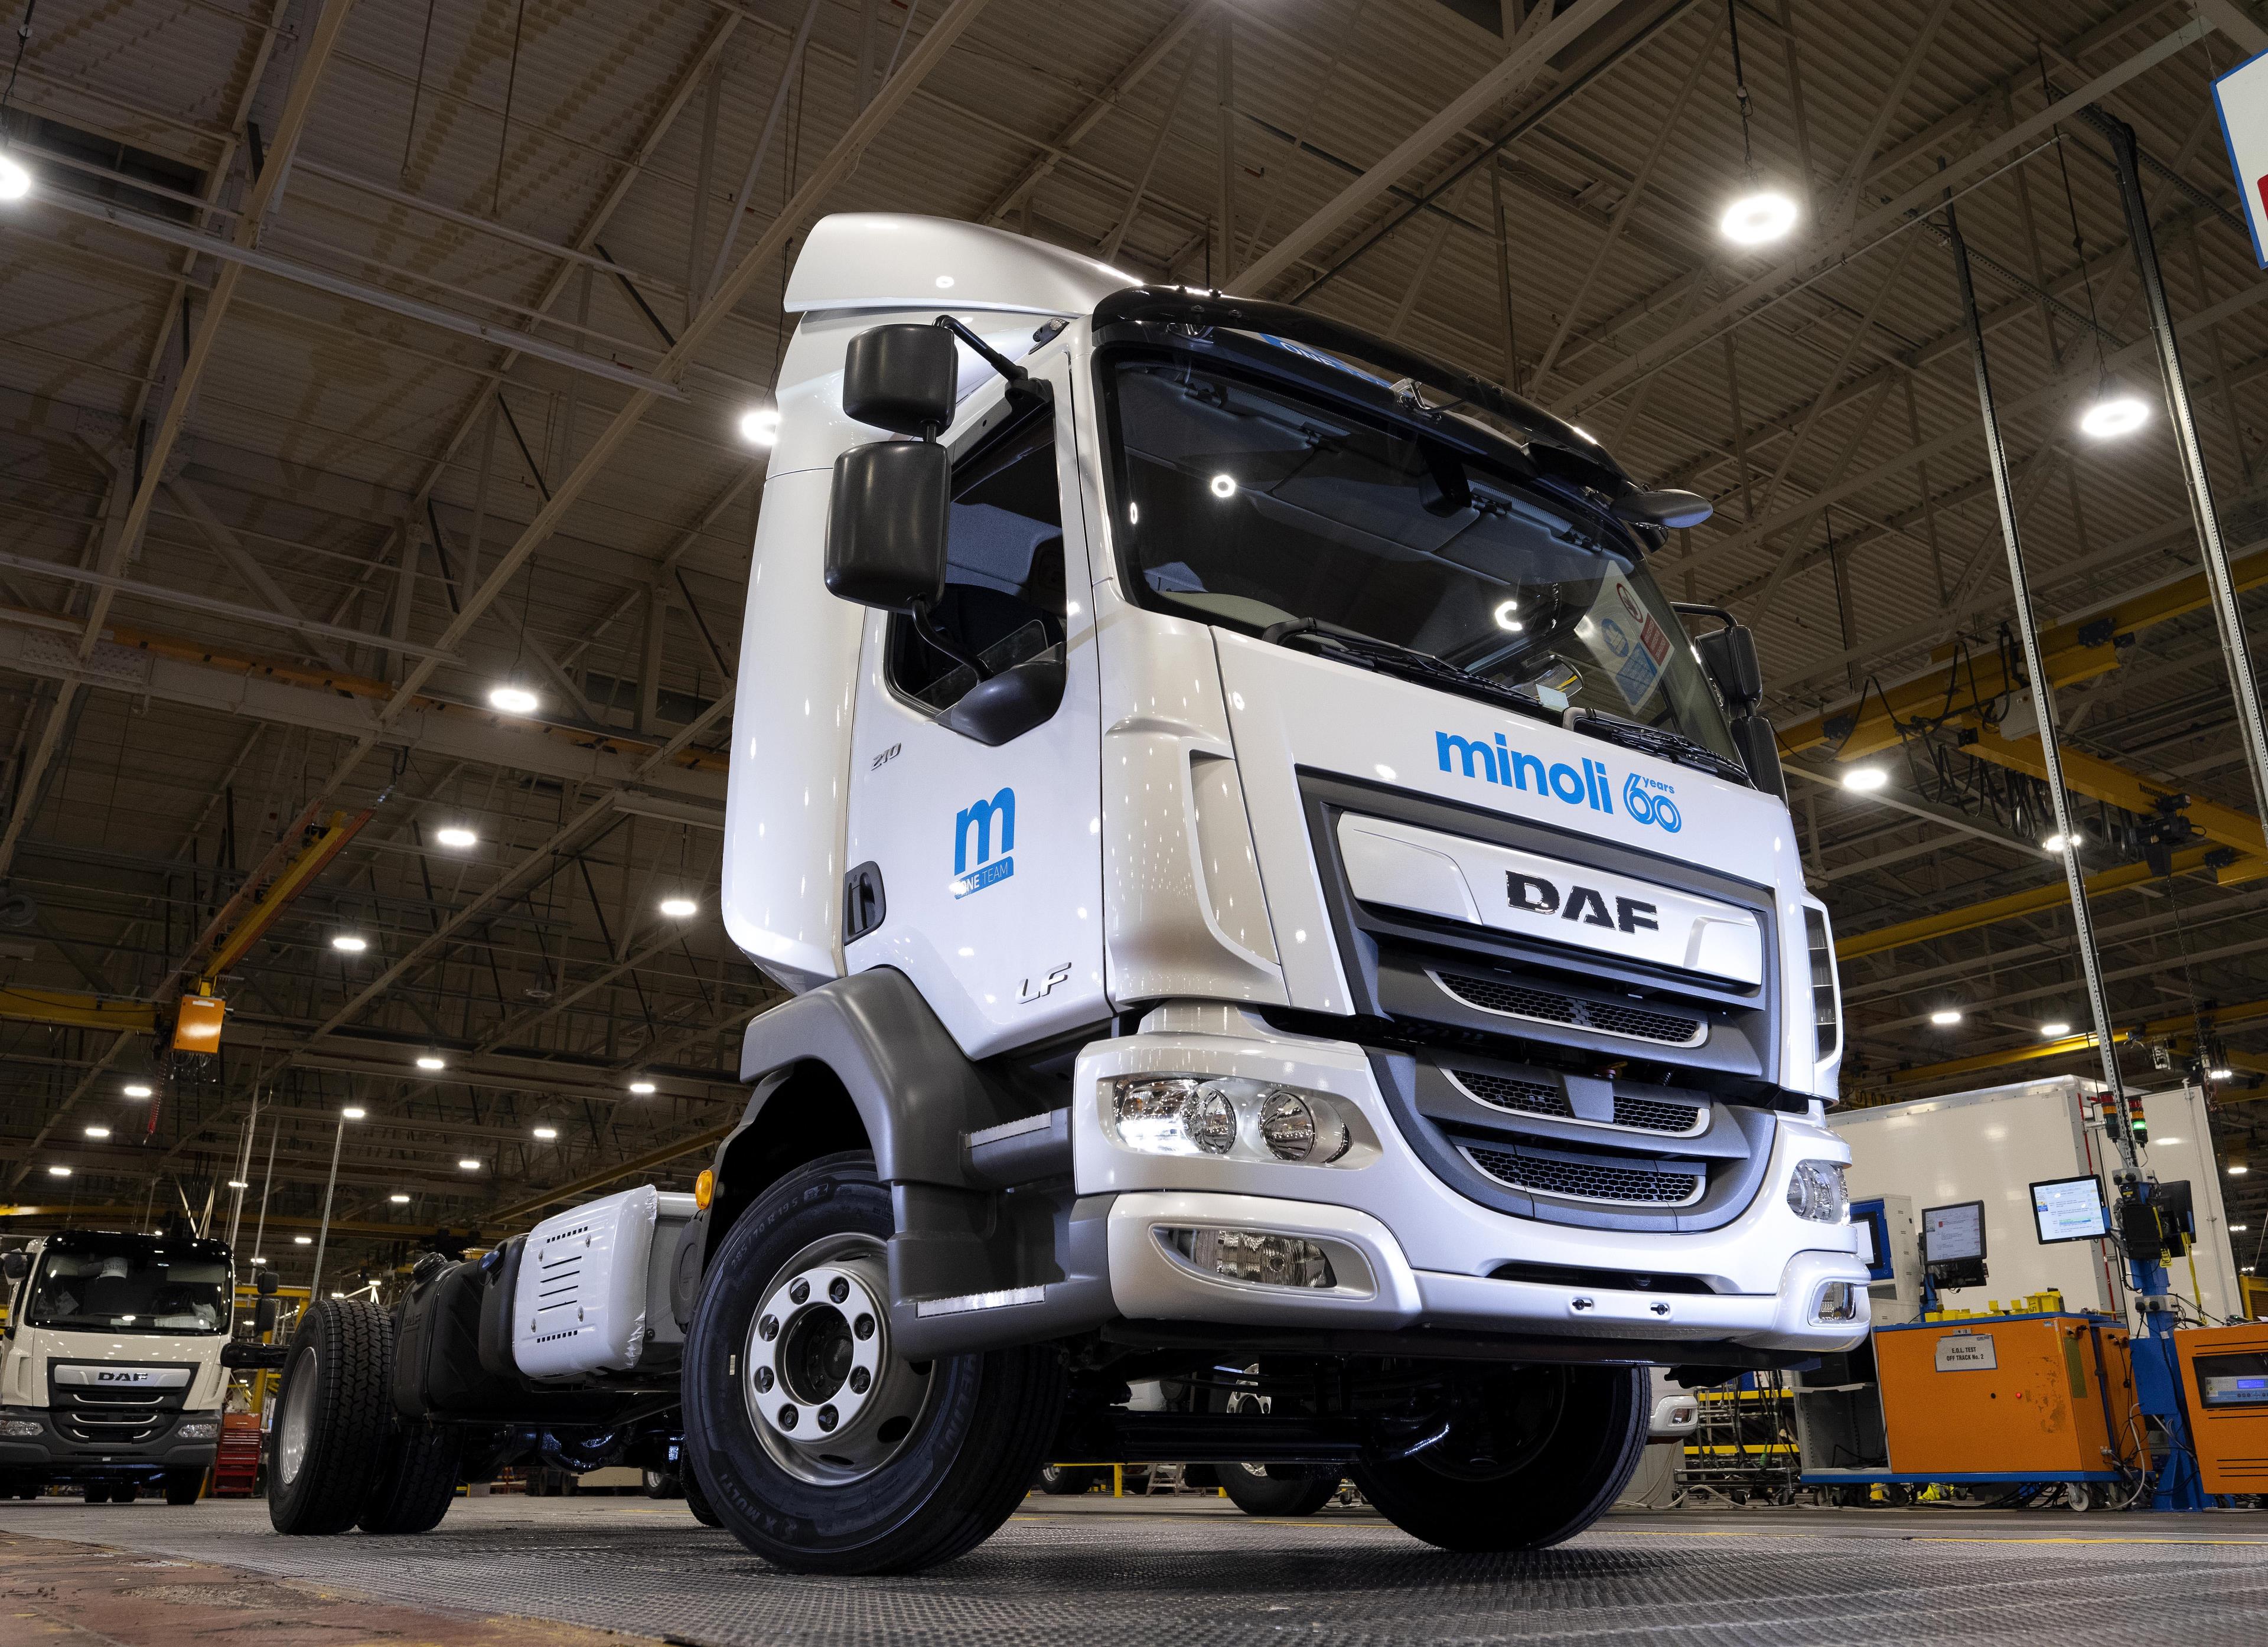 02 DAF Leyland Trucks half million vehicle production milestone